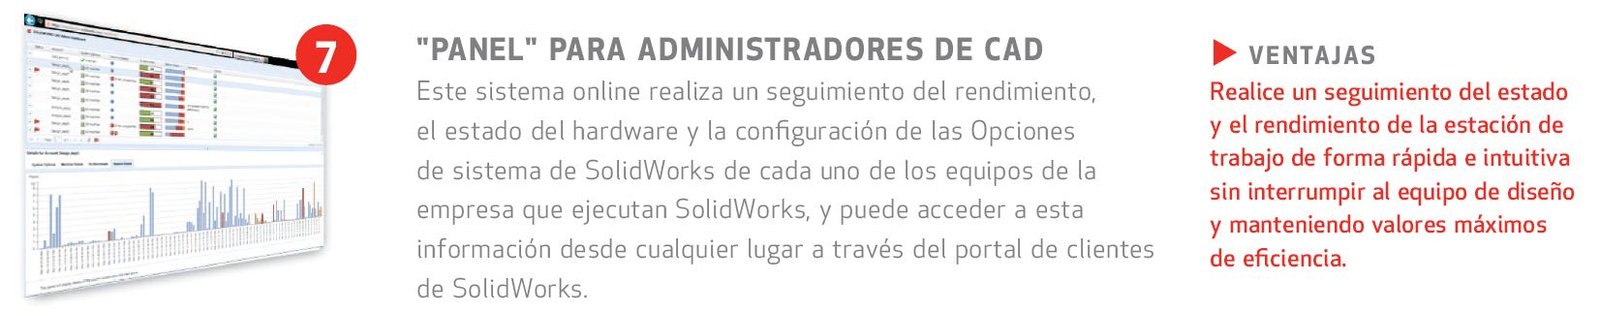 SolidWorks Panel para Administradores de CAD 2013 - 2014